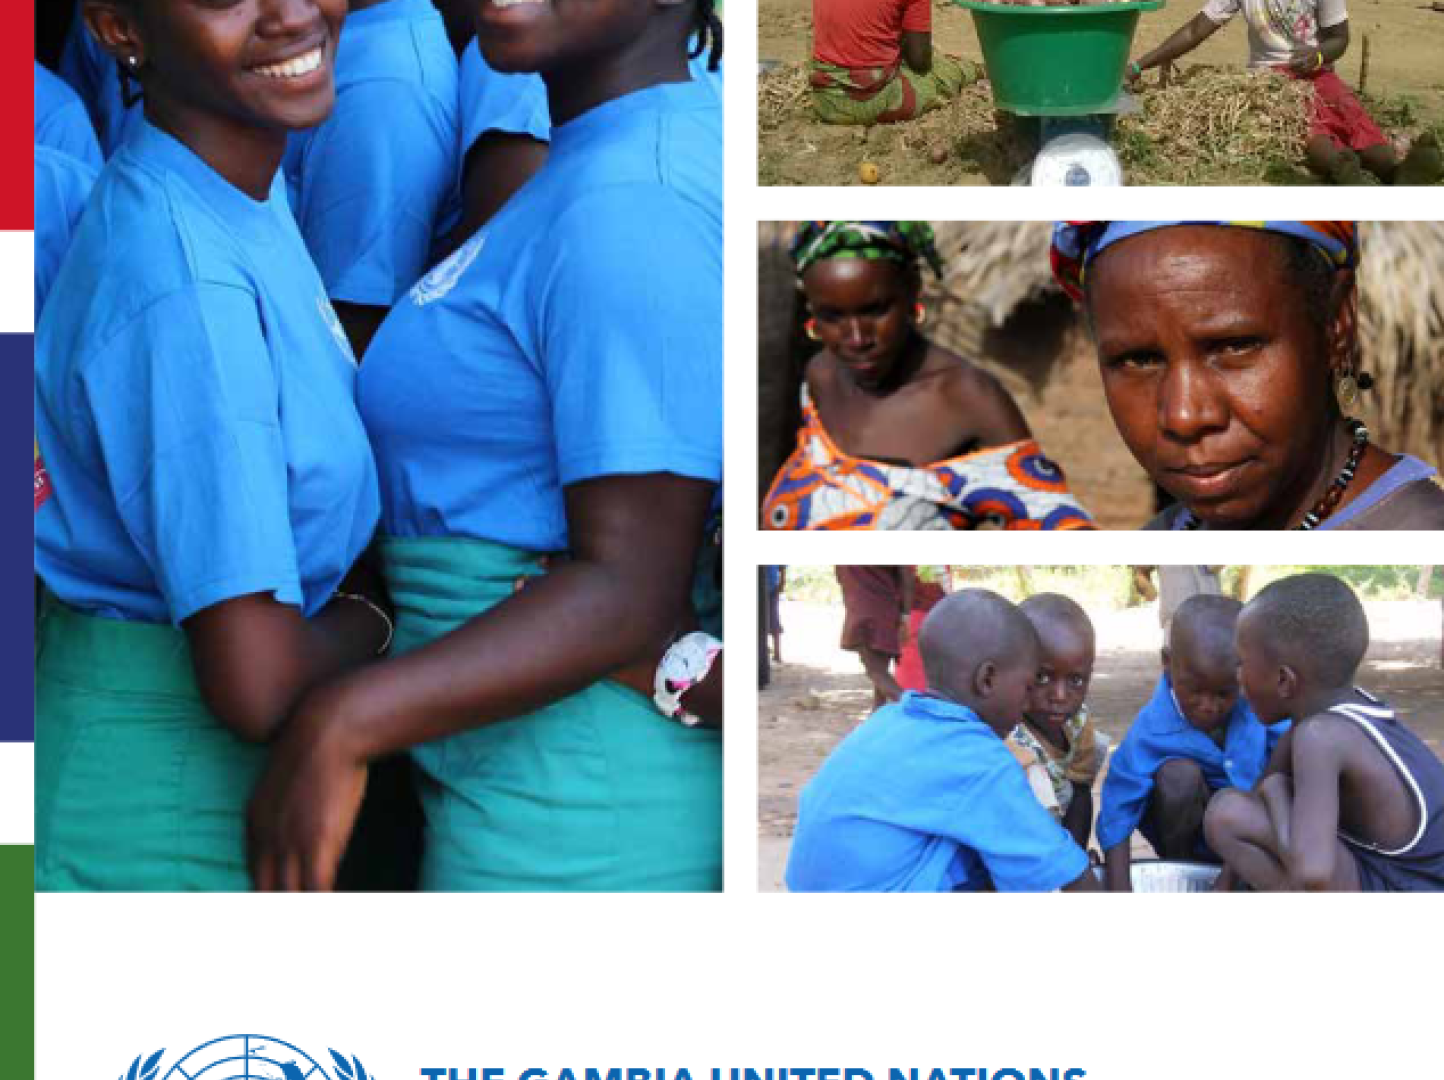 The Gambia United Nations Development Assistance Framework (UNDAF) 2017-2021